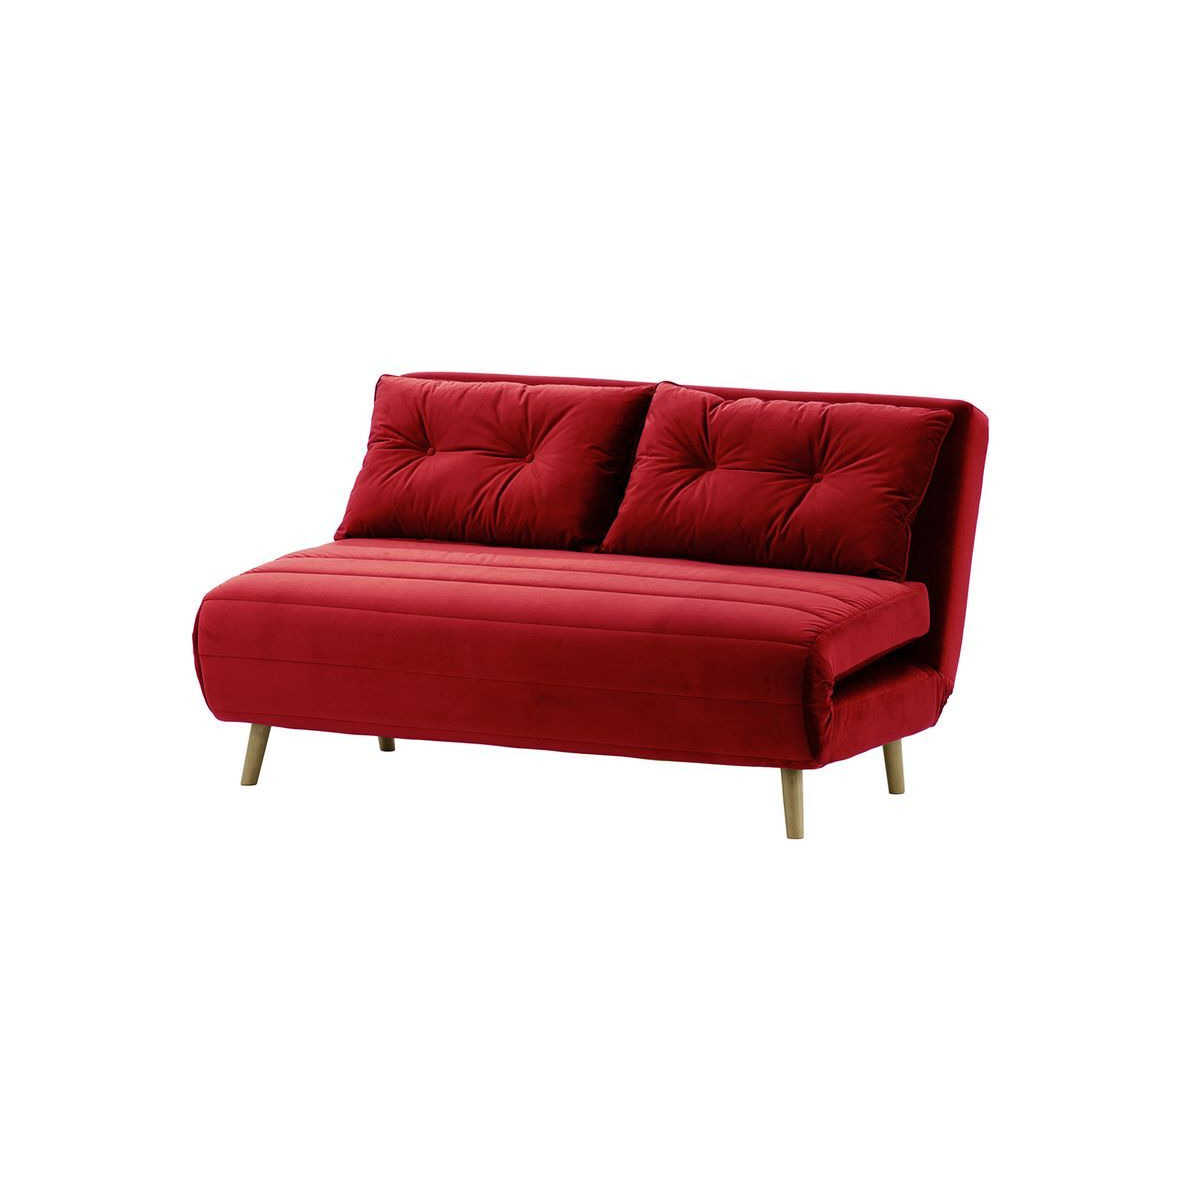 Flic Large Double Sofa Bed - width 142 cm, dark green, Leg colour: aveo - image 1